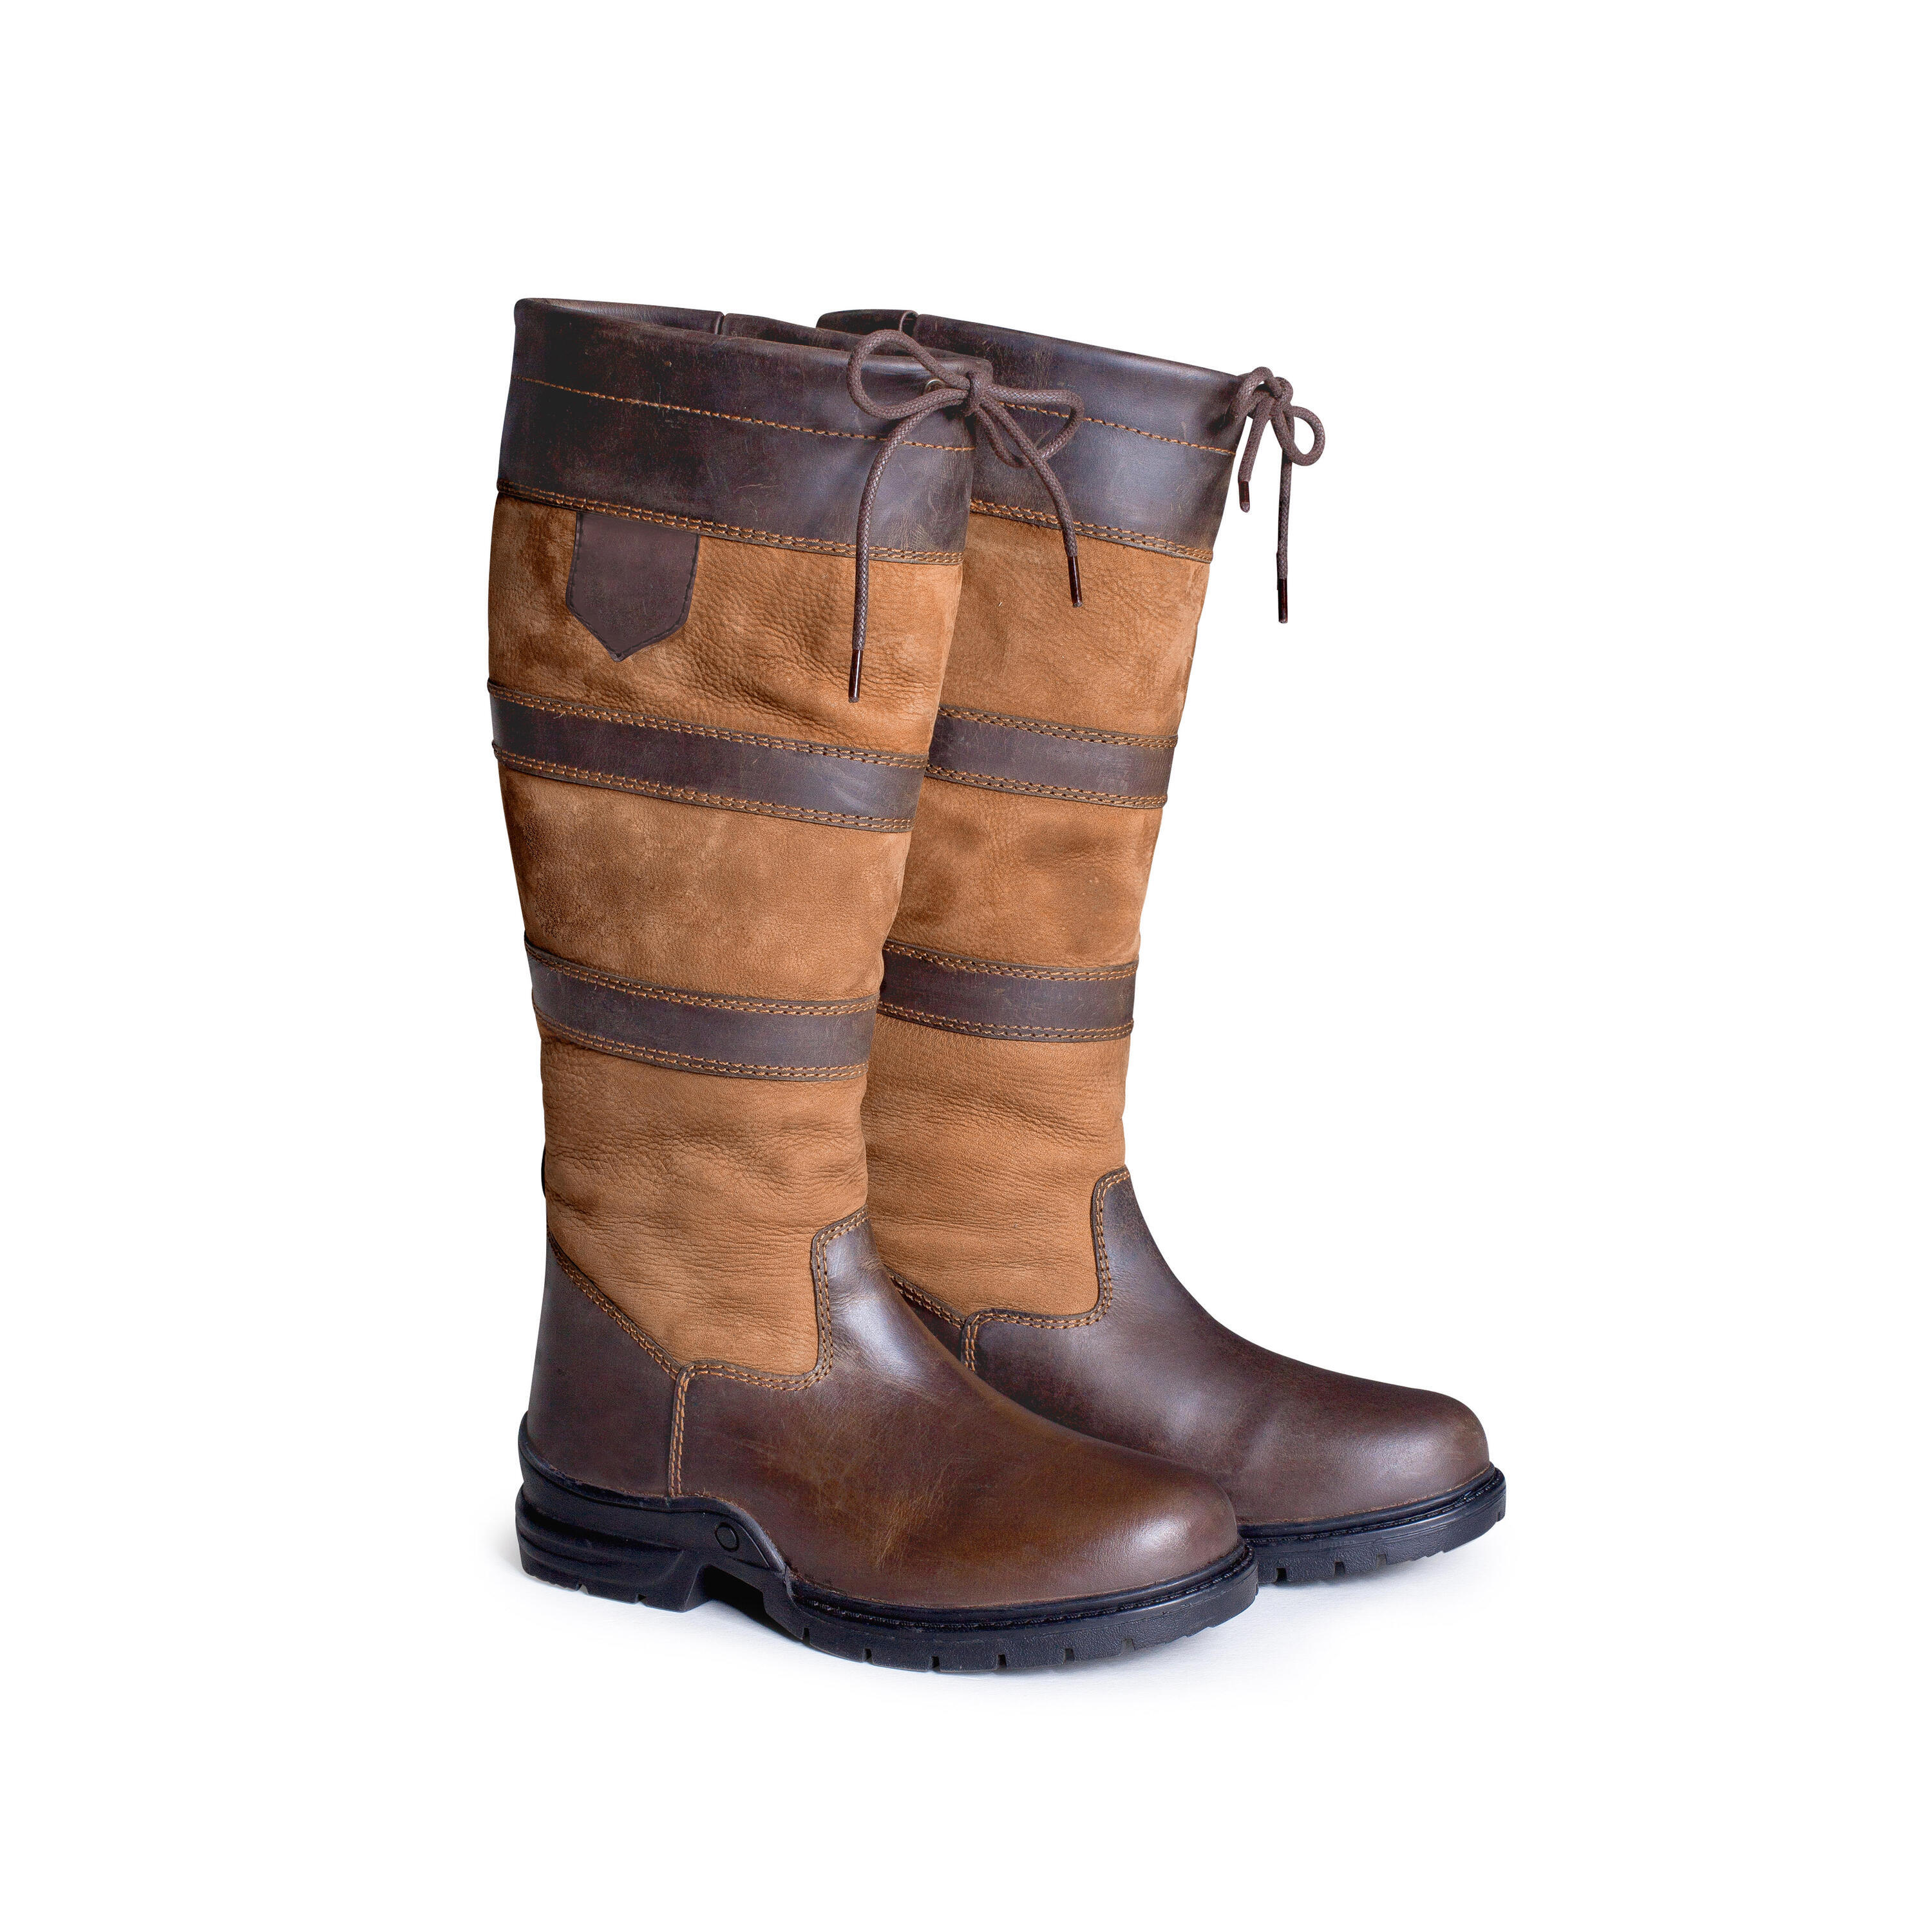 WALDHAUSEN Refurbished Warm Long Country Boots - Brown - A Grade